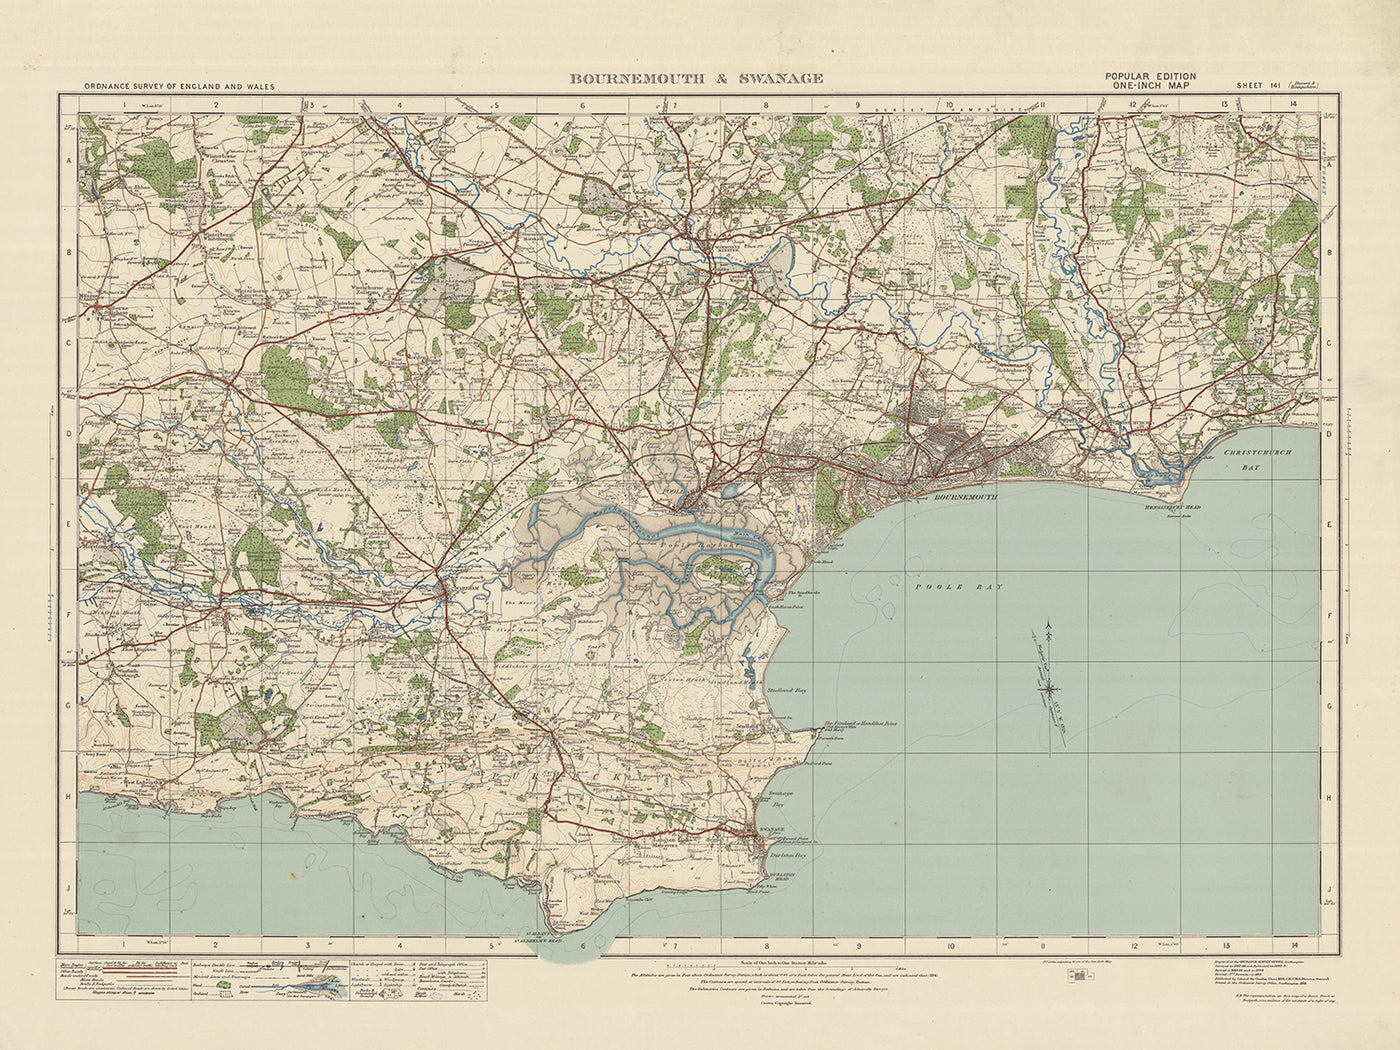 Mapa antiguo del Ordnance Survey, Hoja 141 - Bournemouth & Swanage, 1919-1926: Poole, Christchurch, Wareham, Poole Harbour, Isla de Purbeck, Corfe Castle